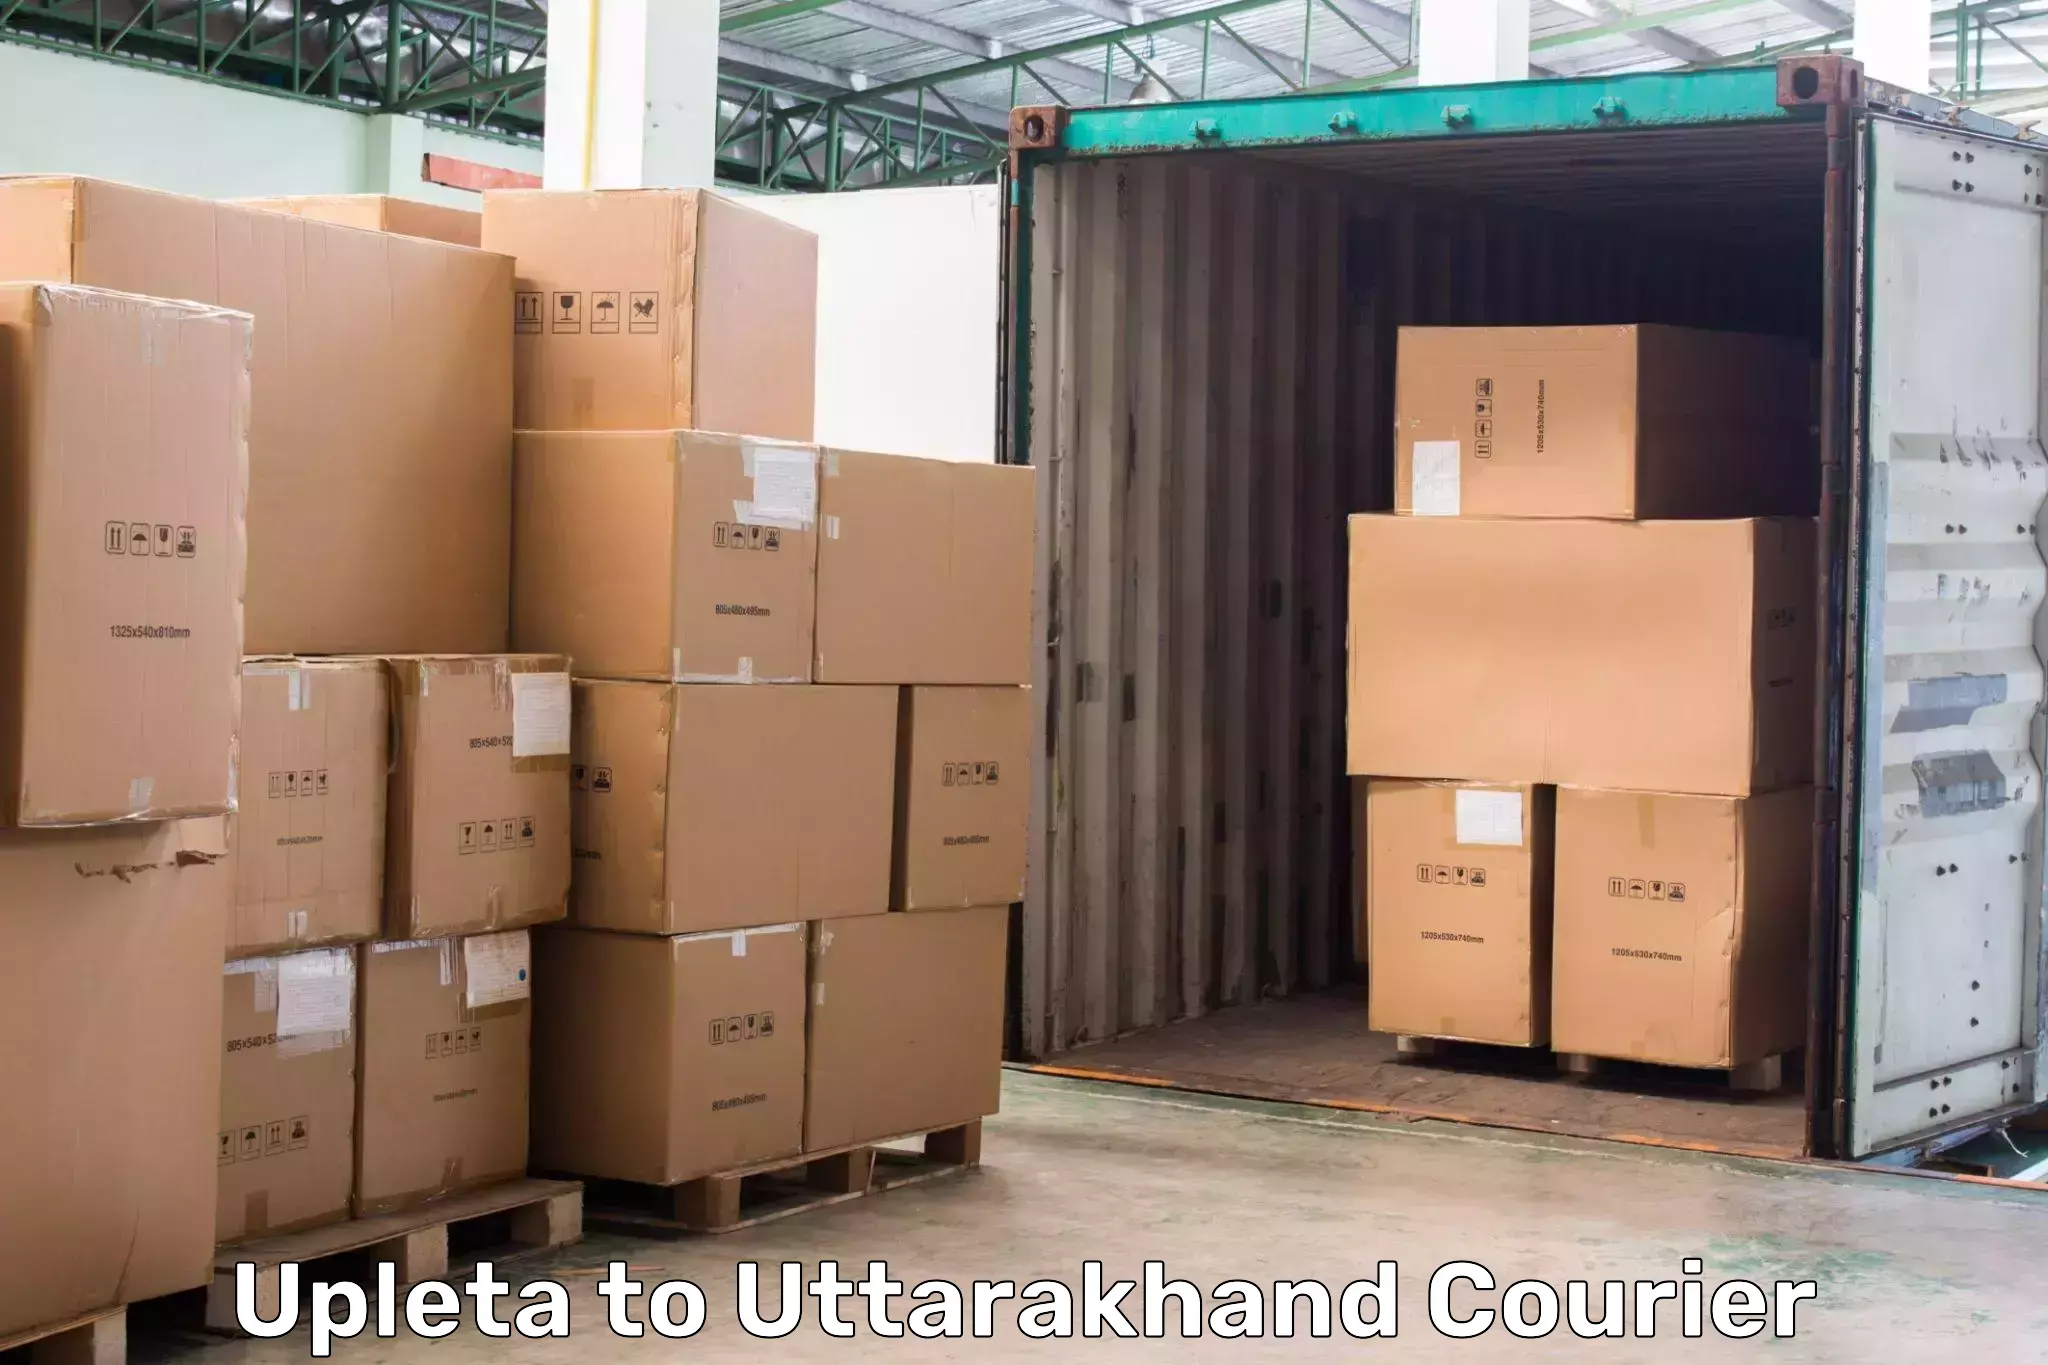 On-call courier service Upleta to Doiwala